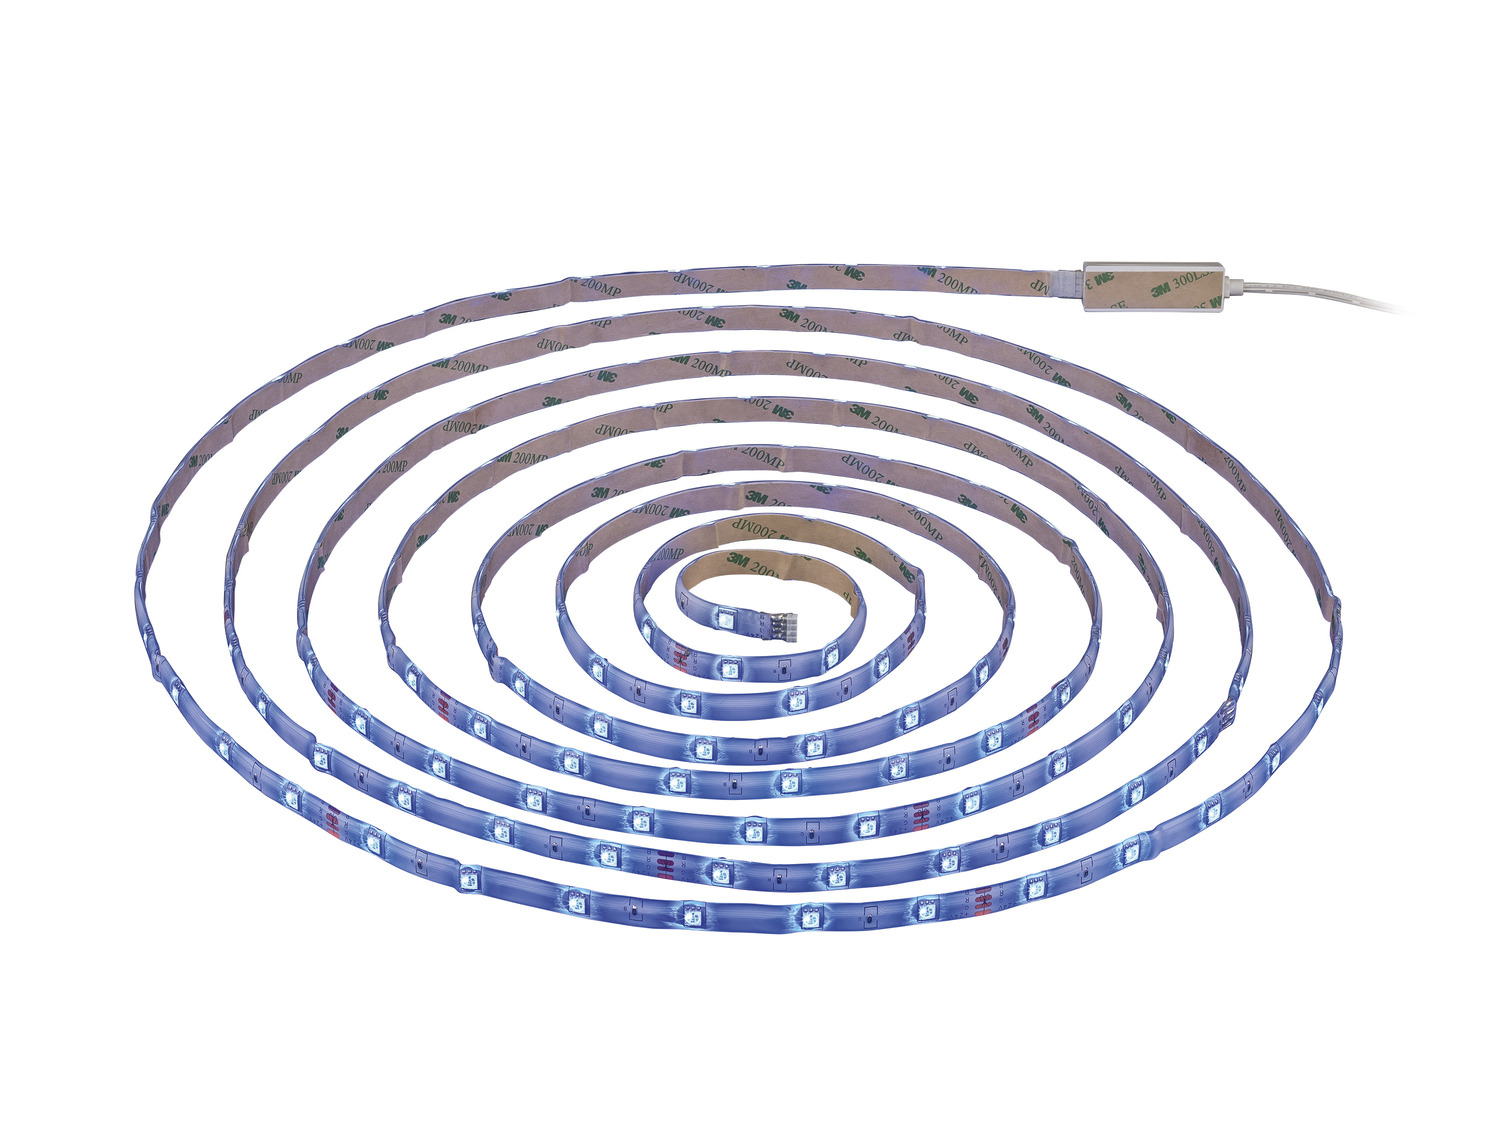 LEDs, 24 LIVARNO | 5 m LED-Band, LIDL 150 home W,